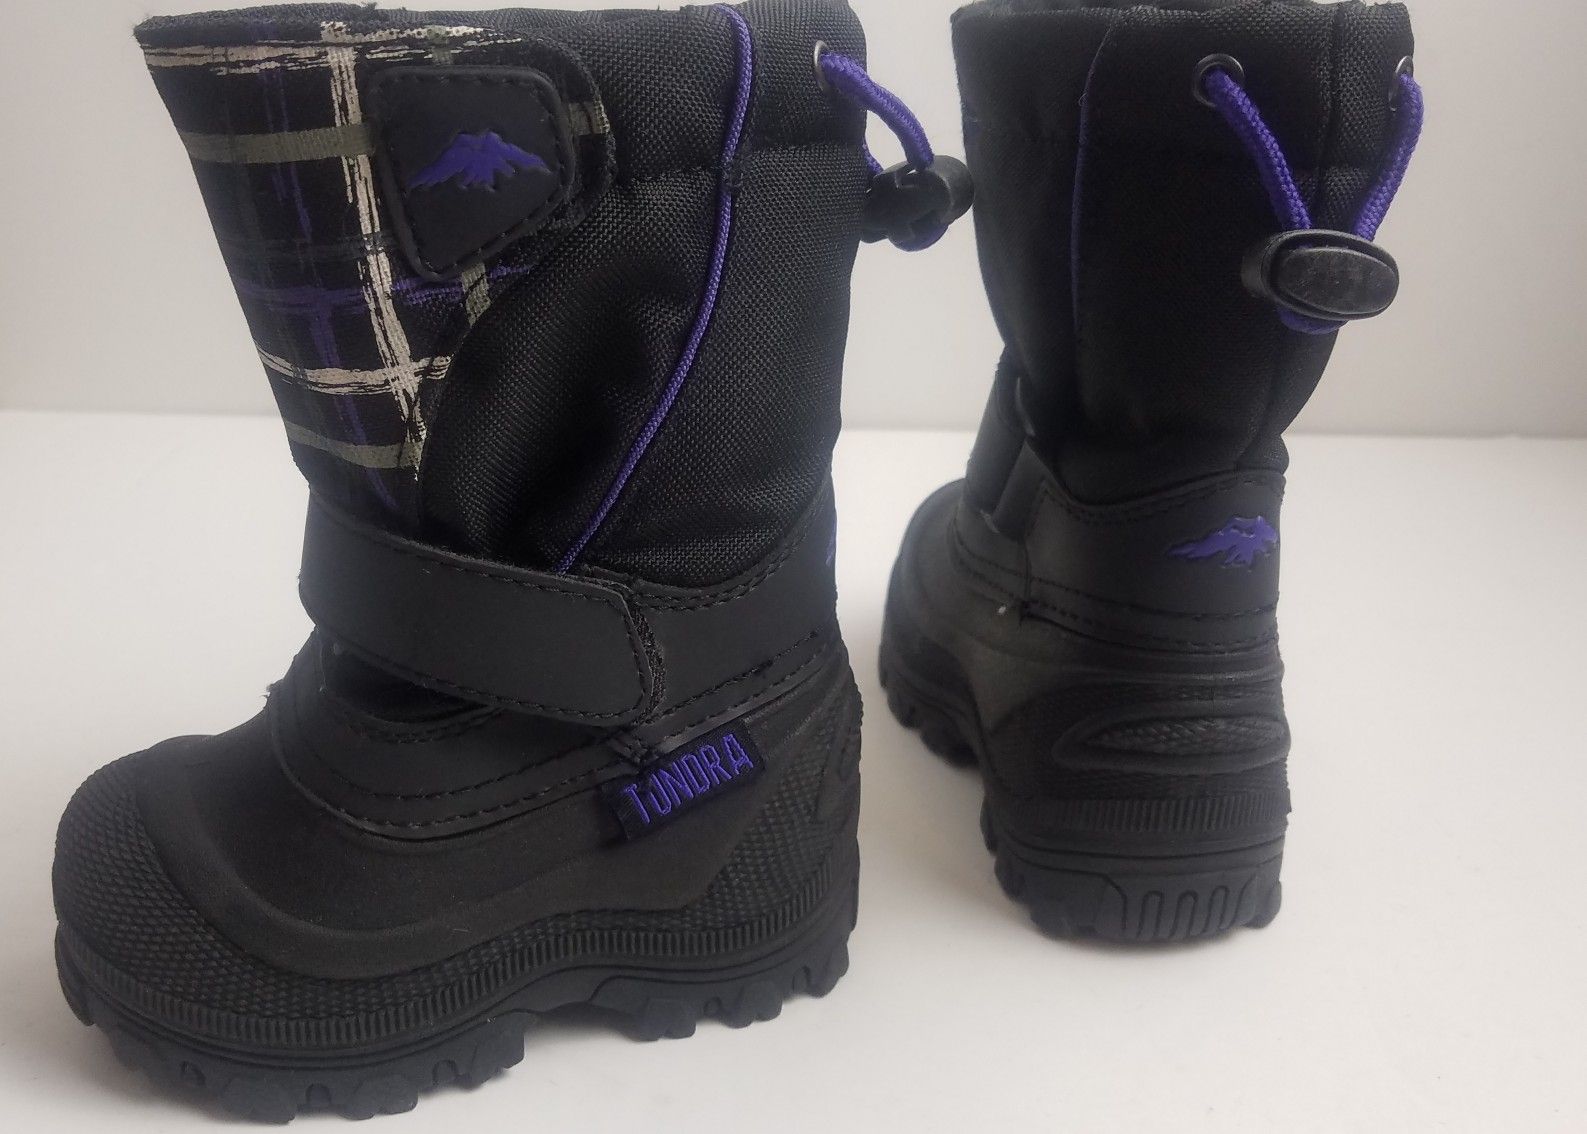 Tundra Toddler Boys Girls Childrens Kids Slip OnWinter Snow Boots Size 6 Black purple gray white